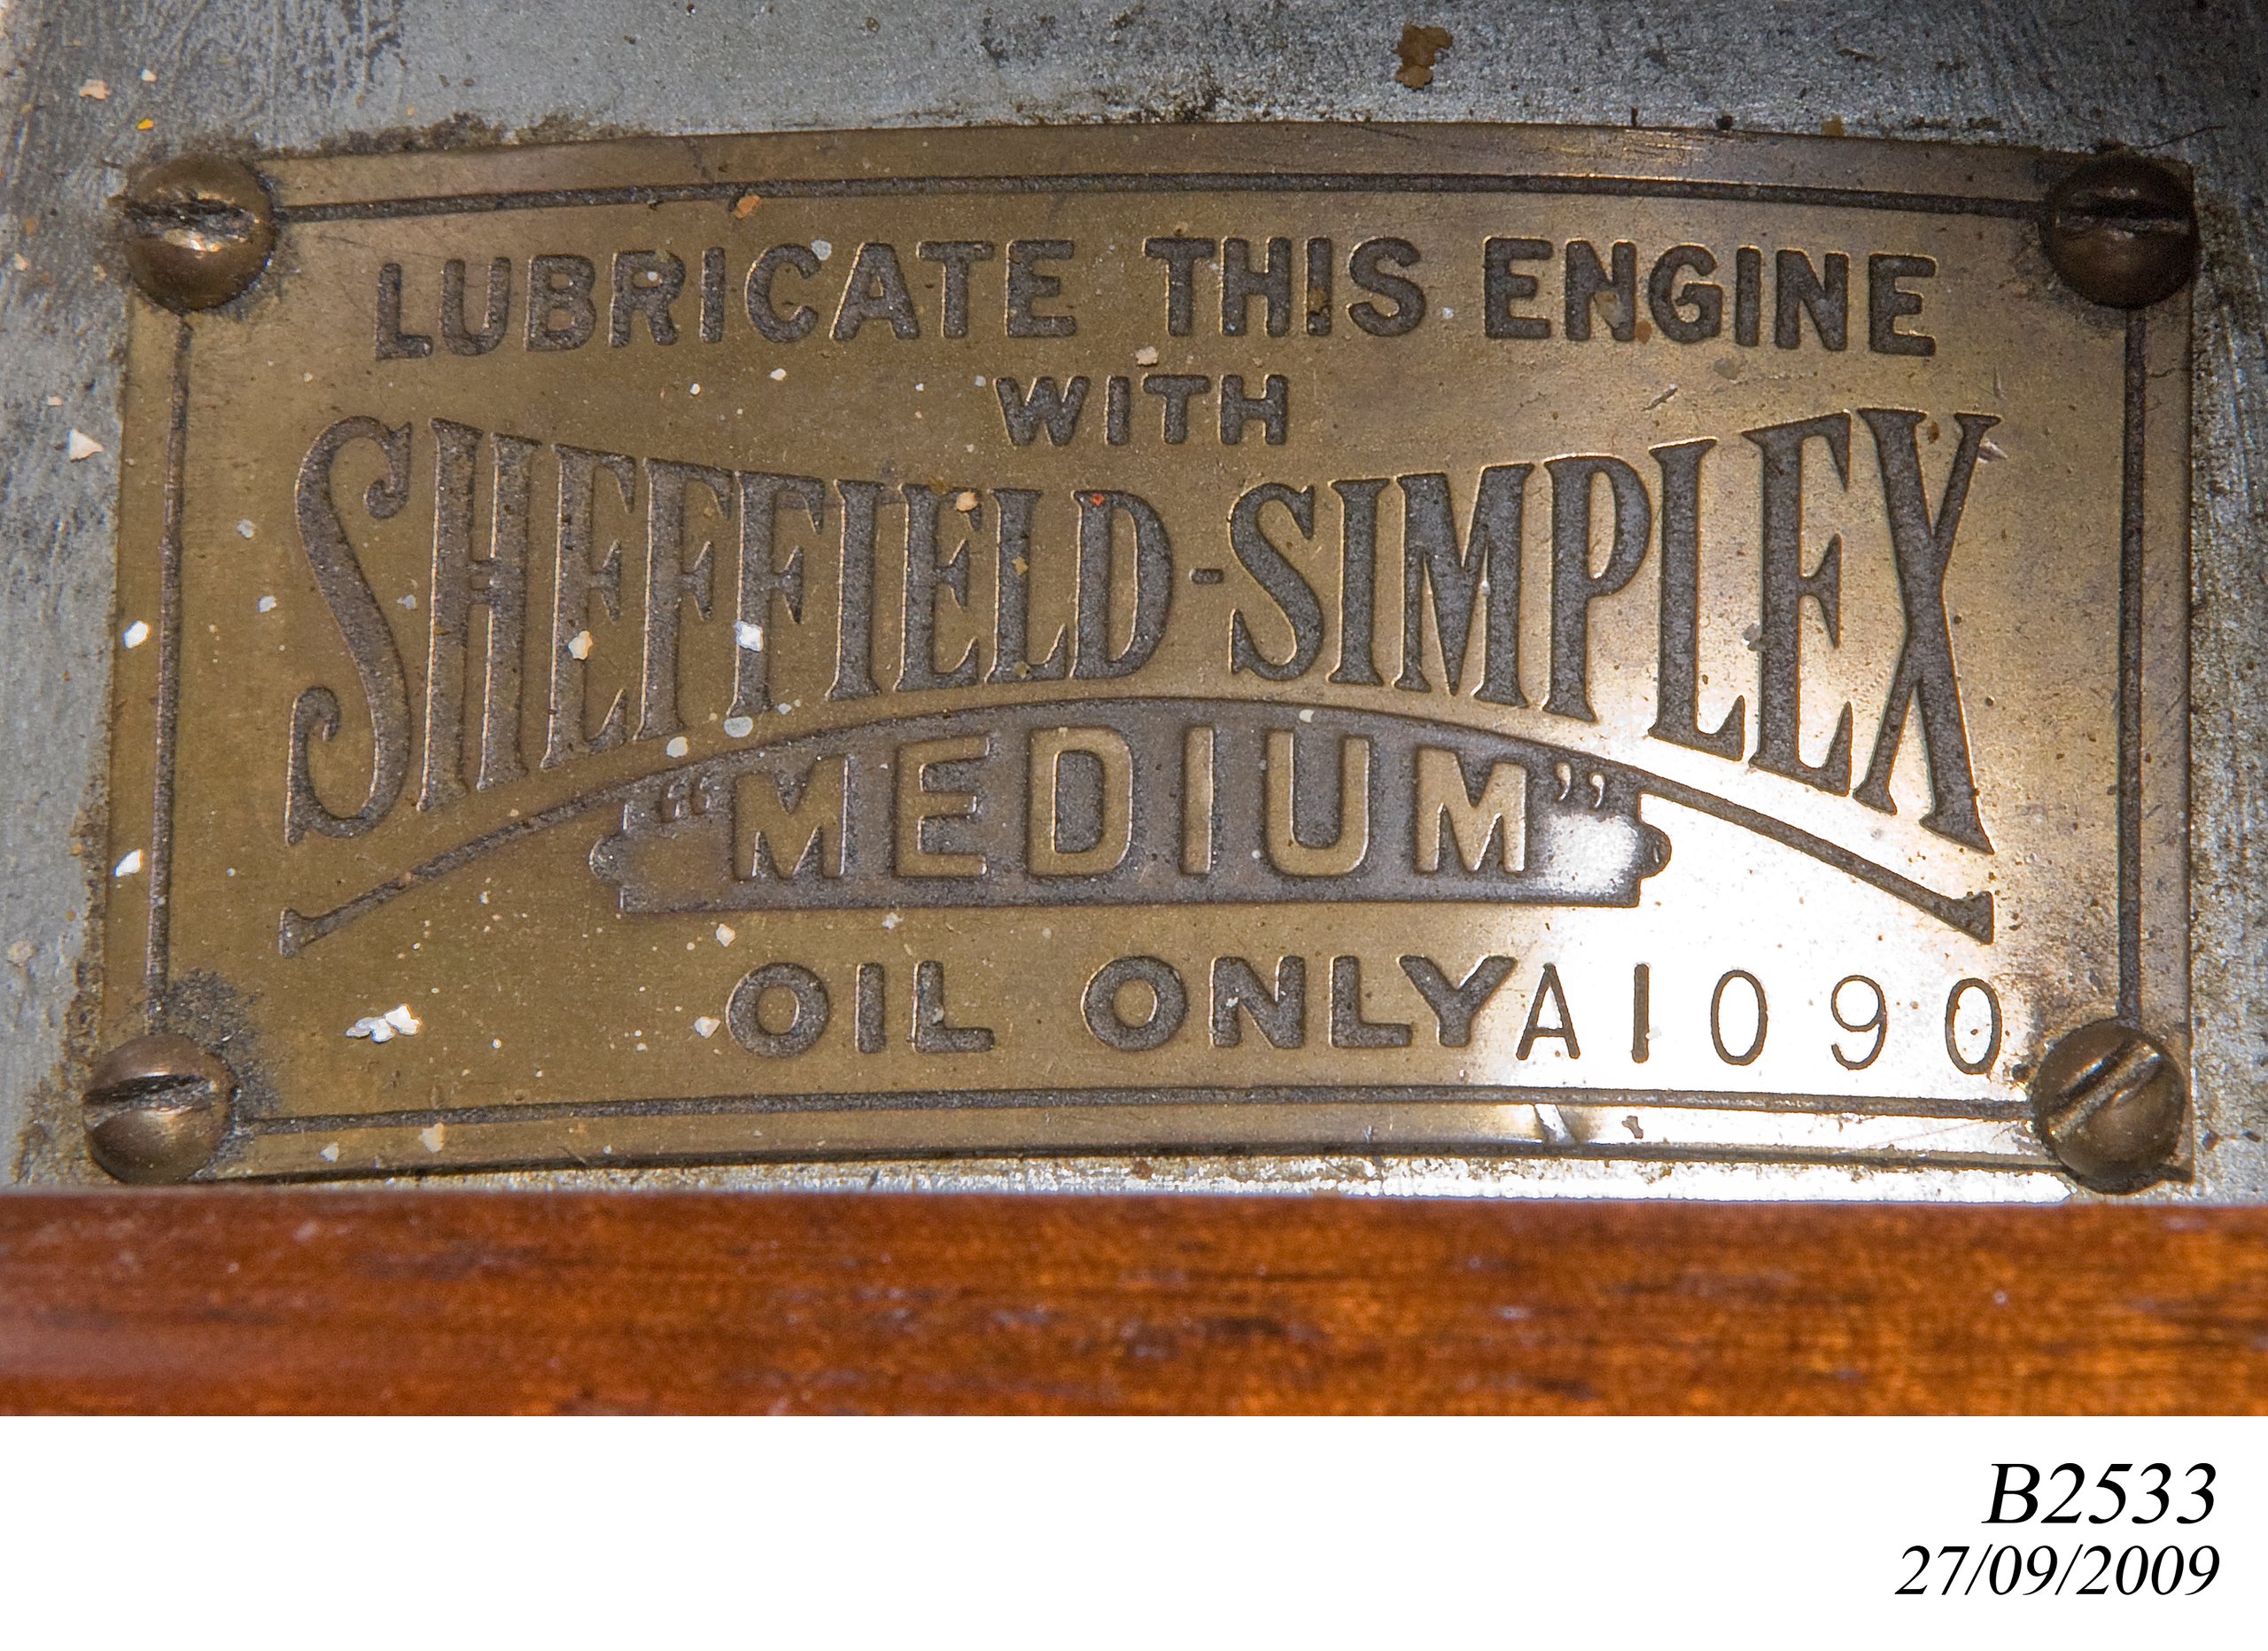 1913 Sheffield Simplex Type 7B tourer